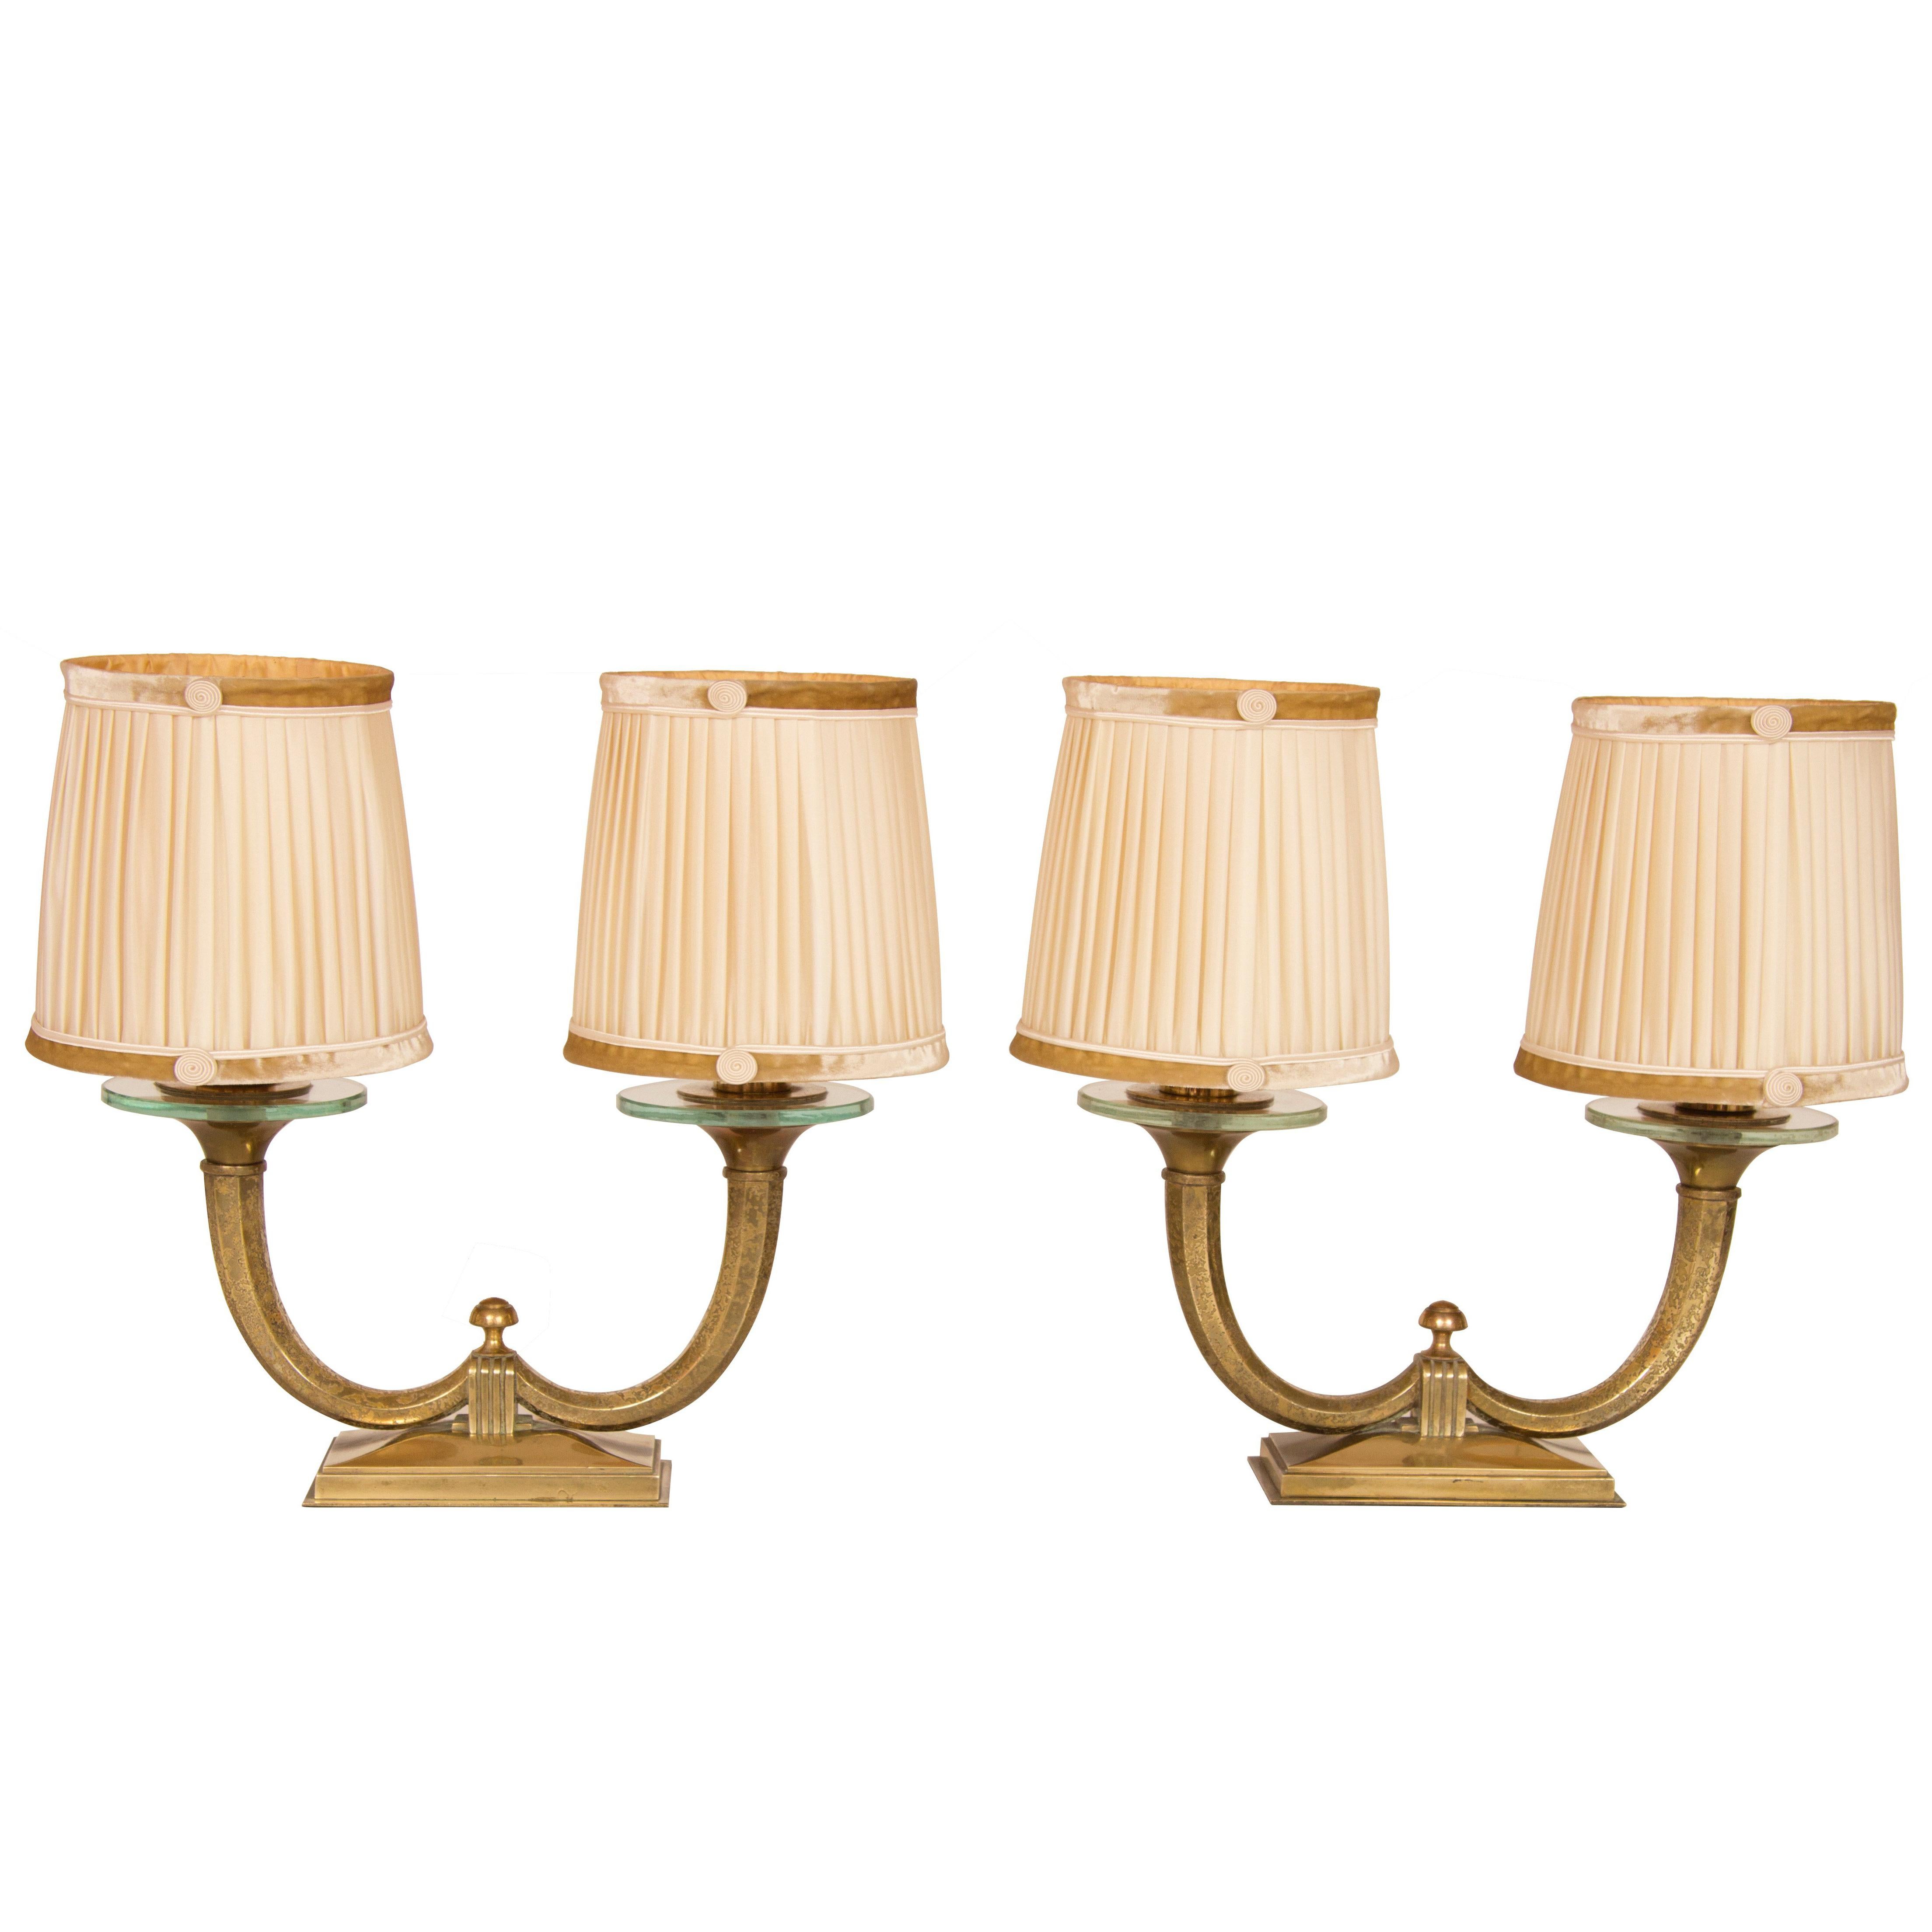 Pair of Gilt Bronze Genet et Michon Lamps with Original Shades For Sale